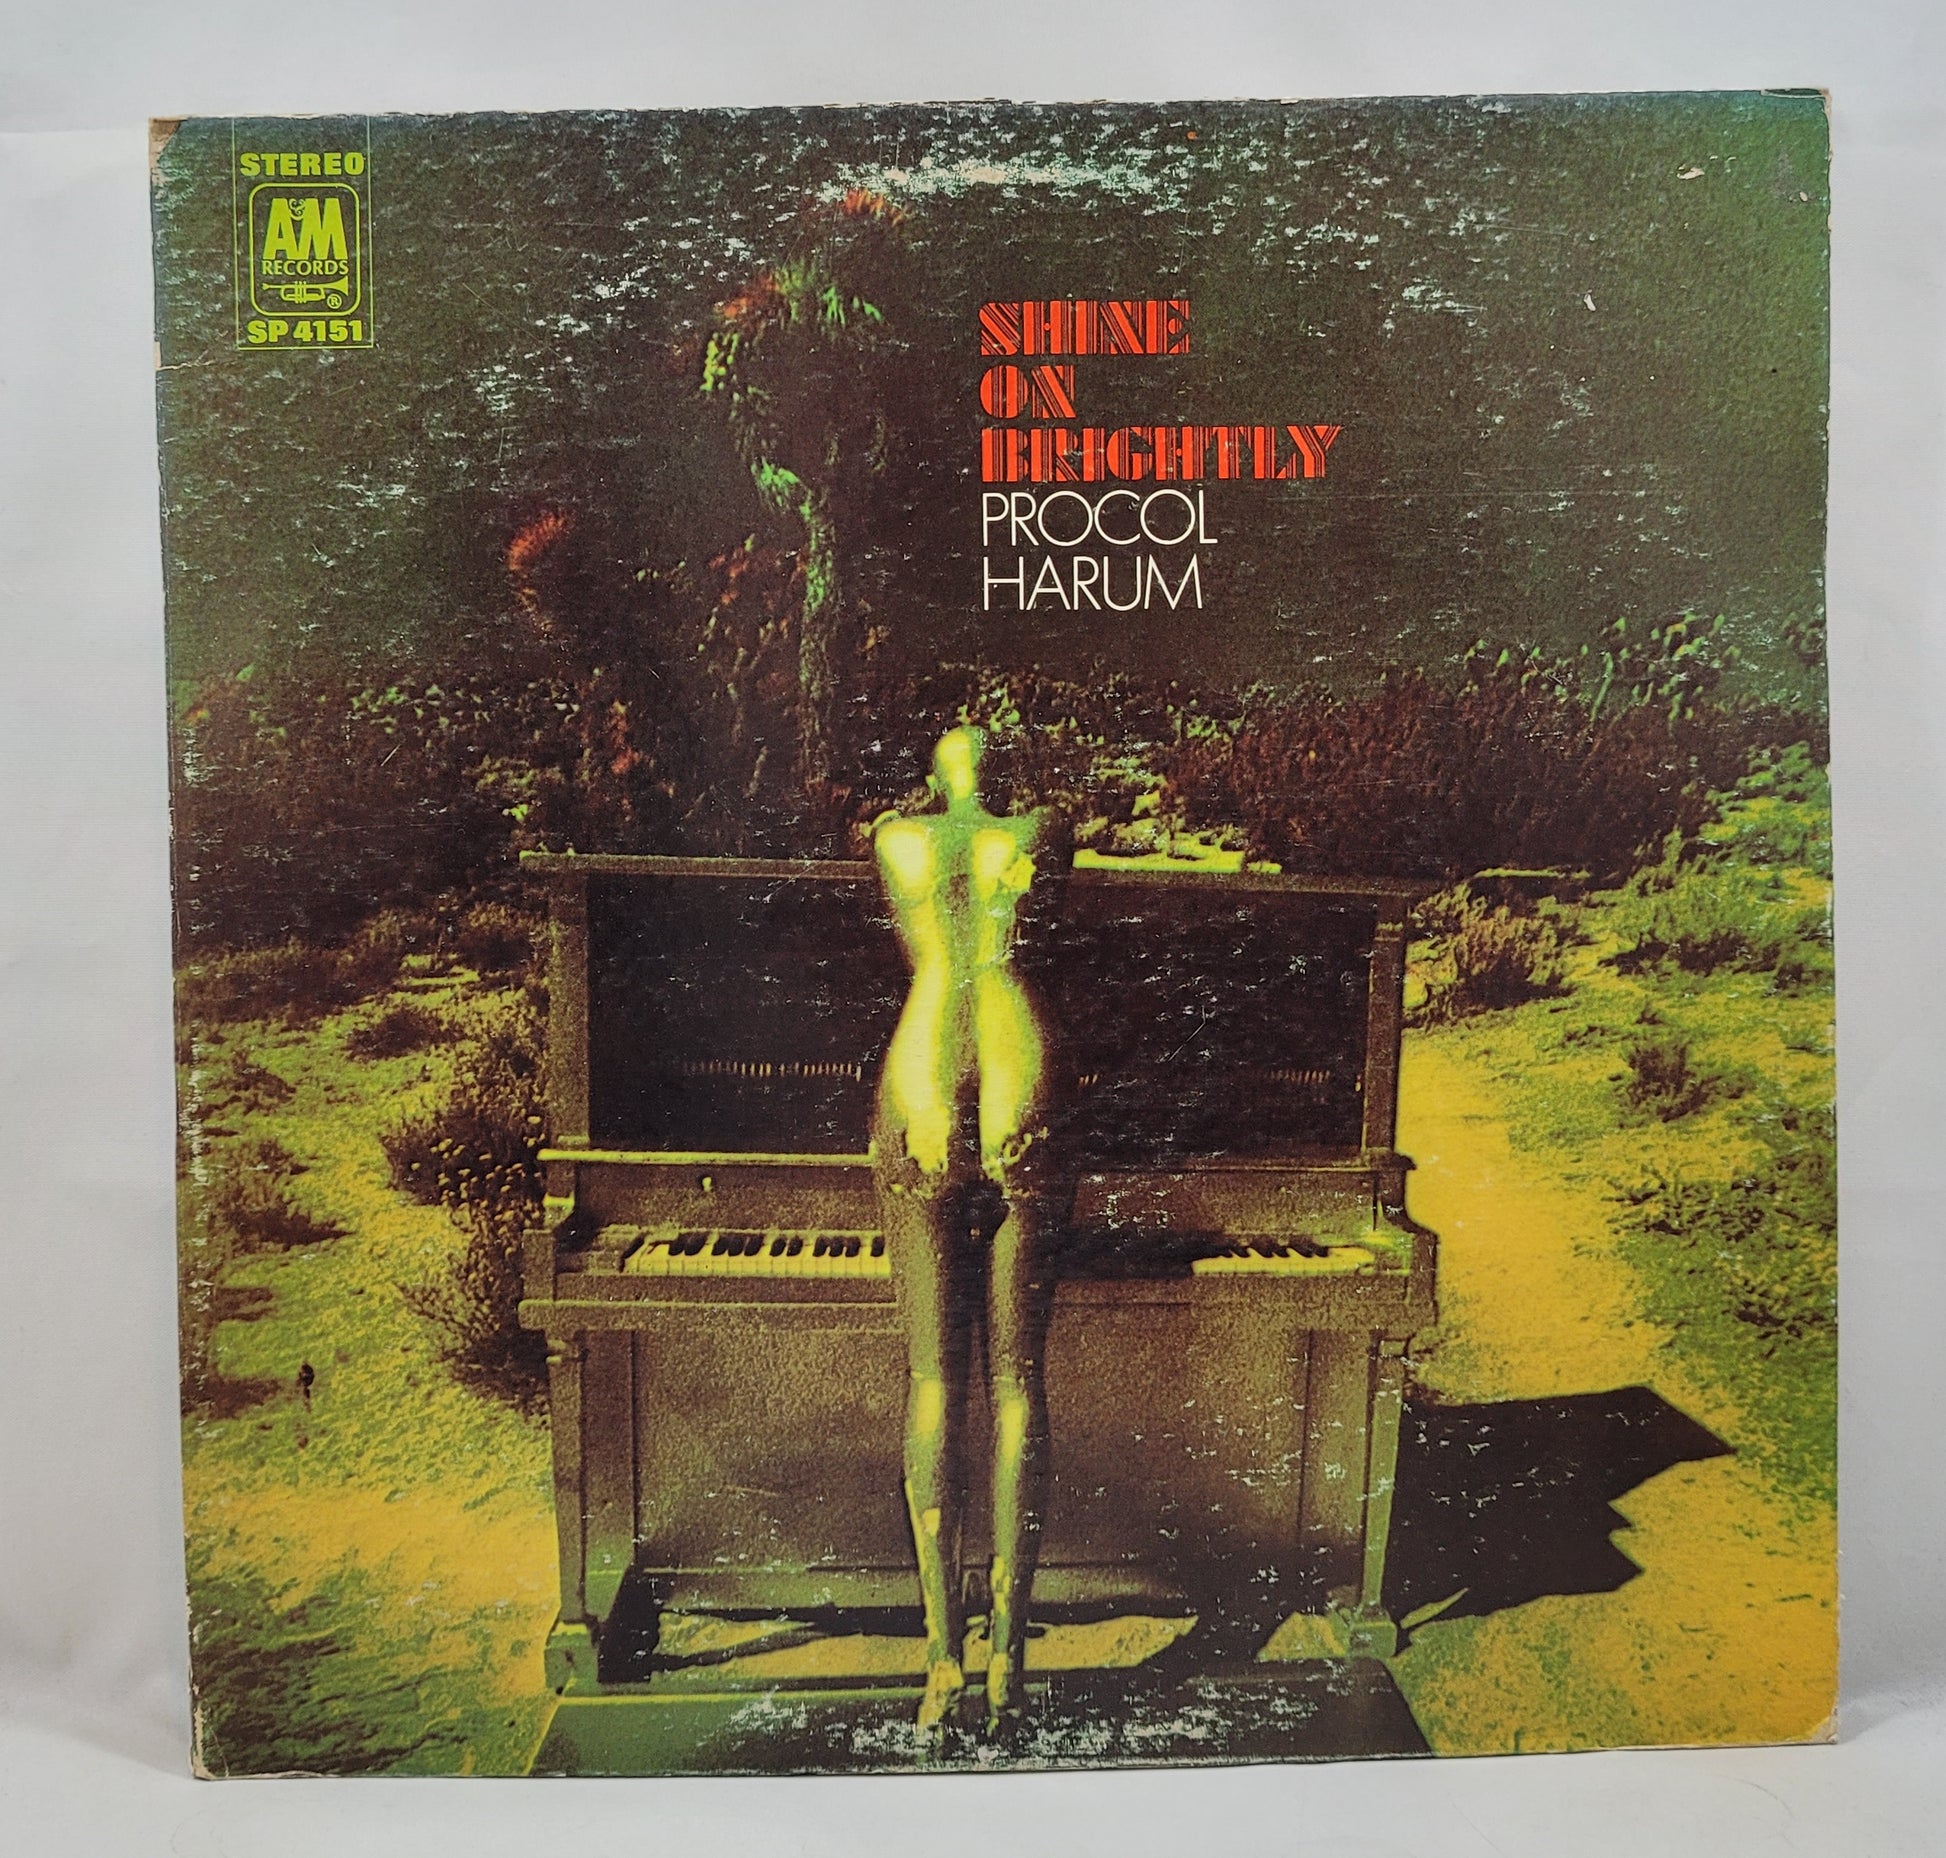 Procol Harum - Shine on Brightly [1968 Monarch Pressing] [Used Vinyl Record LP]